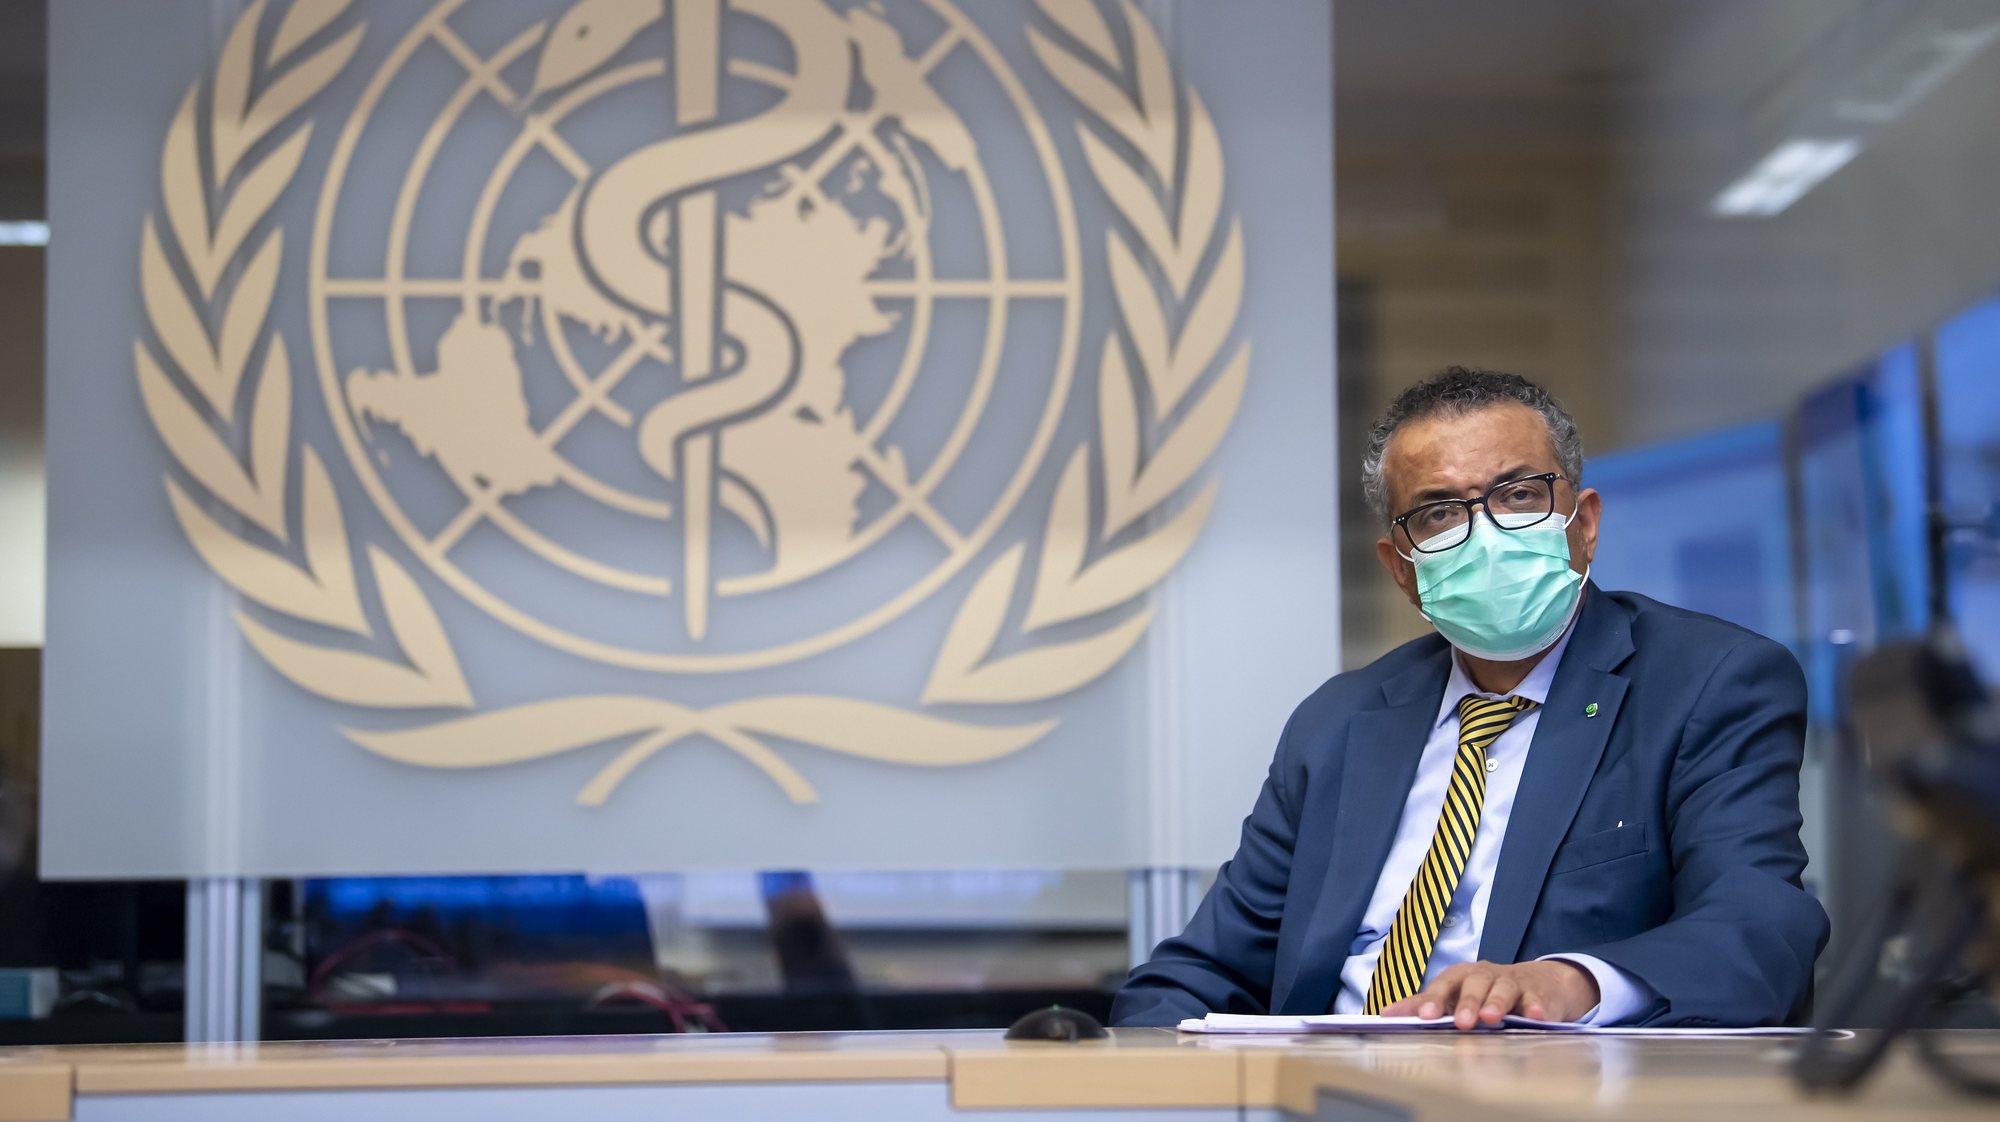 epa08747767 Tedros Adhanom Ghebreyesus, Director General of the World Health Organization (WHO), speaks during a visit of the Presidents of the Swiss Federal Chambers, at the World Health Organization (WHO) headquarters in Geneva, Switzerland, 15 October 2020.  EPA/MARTIAL TREZZINI